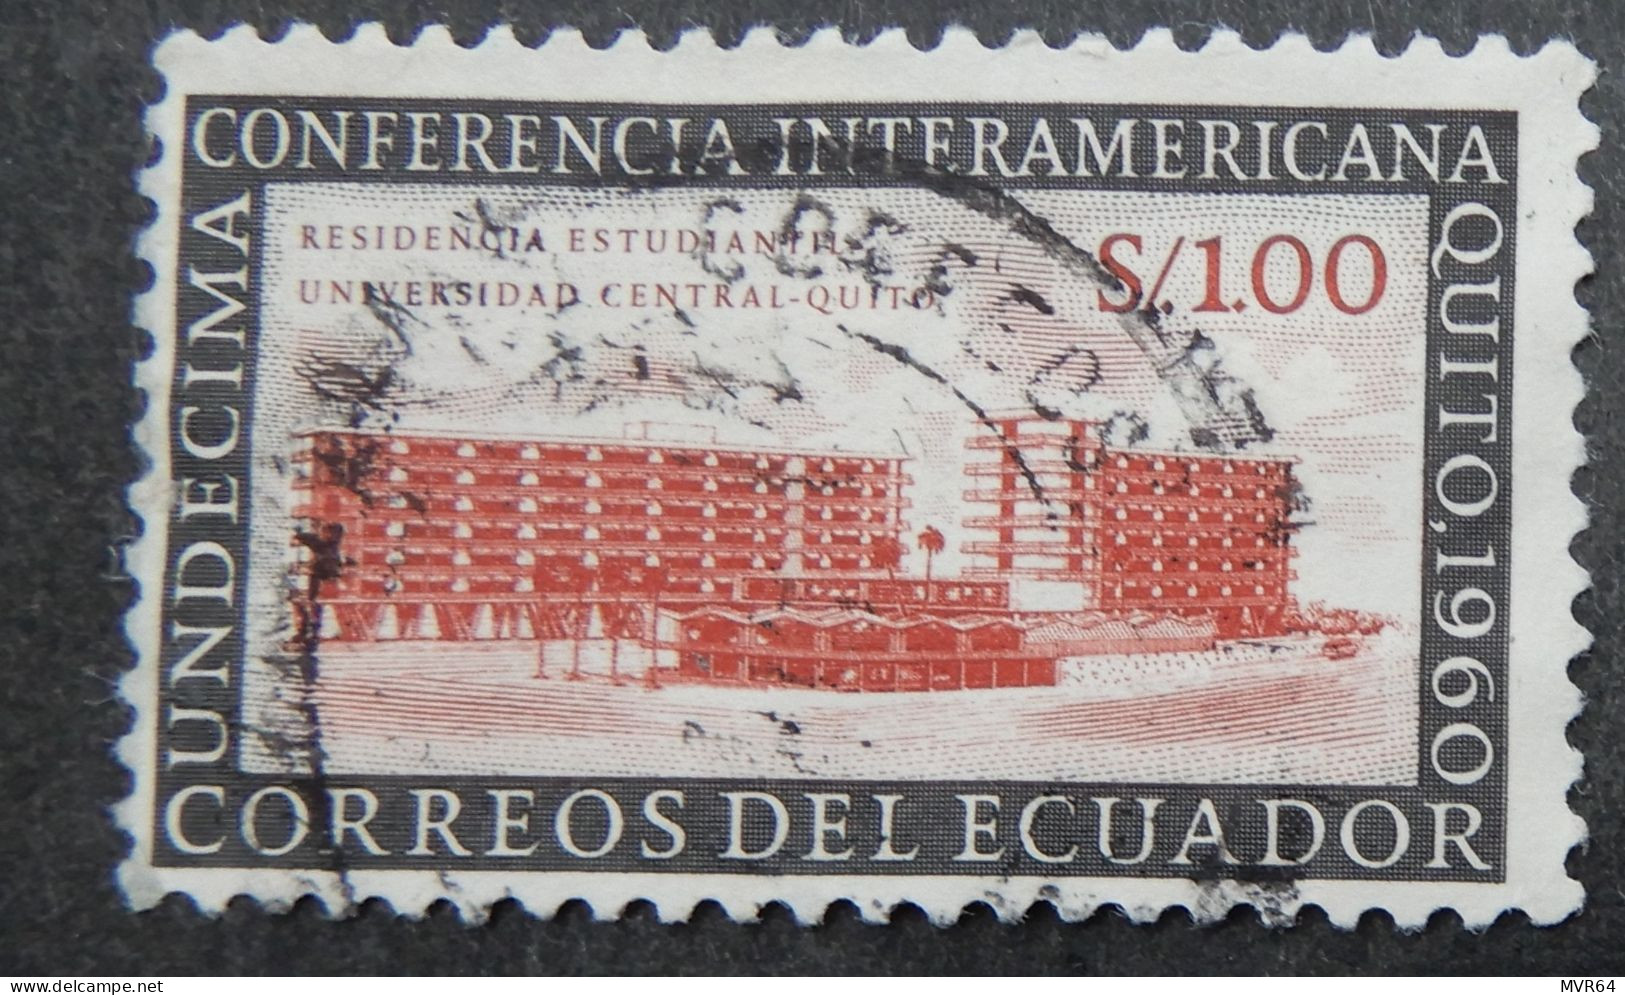 Ecuador 1960 (1a) Residencia Estudiante Universidad Central-Quito - Ecuador